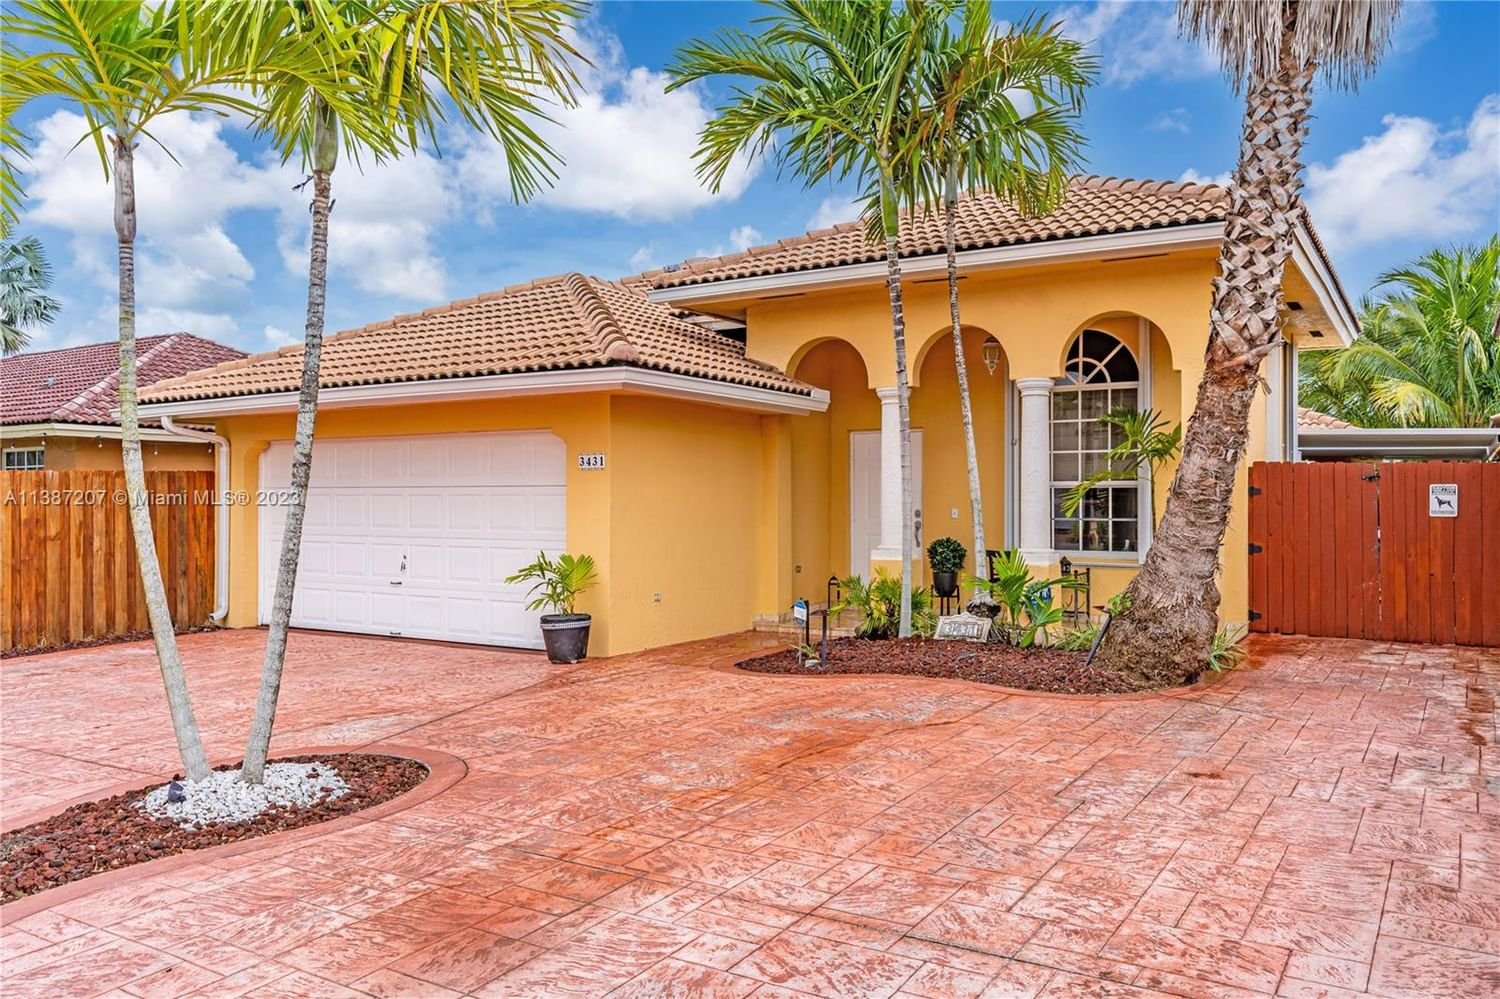 Real estate property located at 3431 154th Ct, Miami-Dade County, Miami, FL